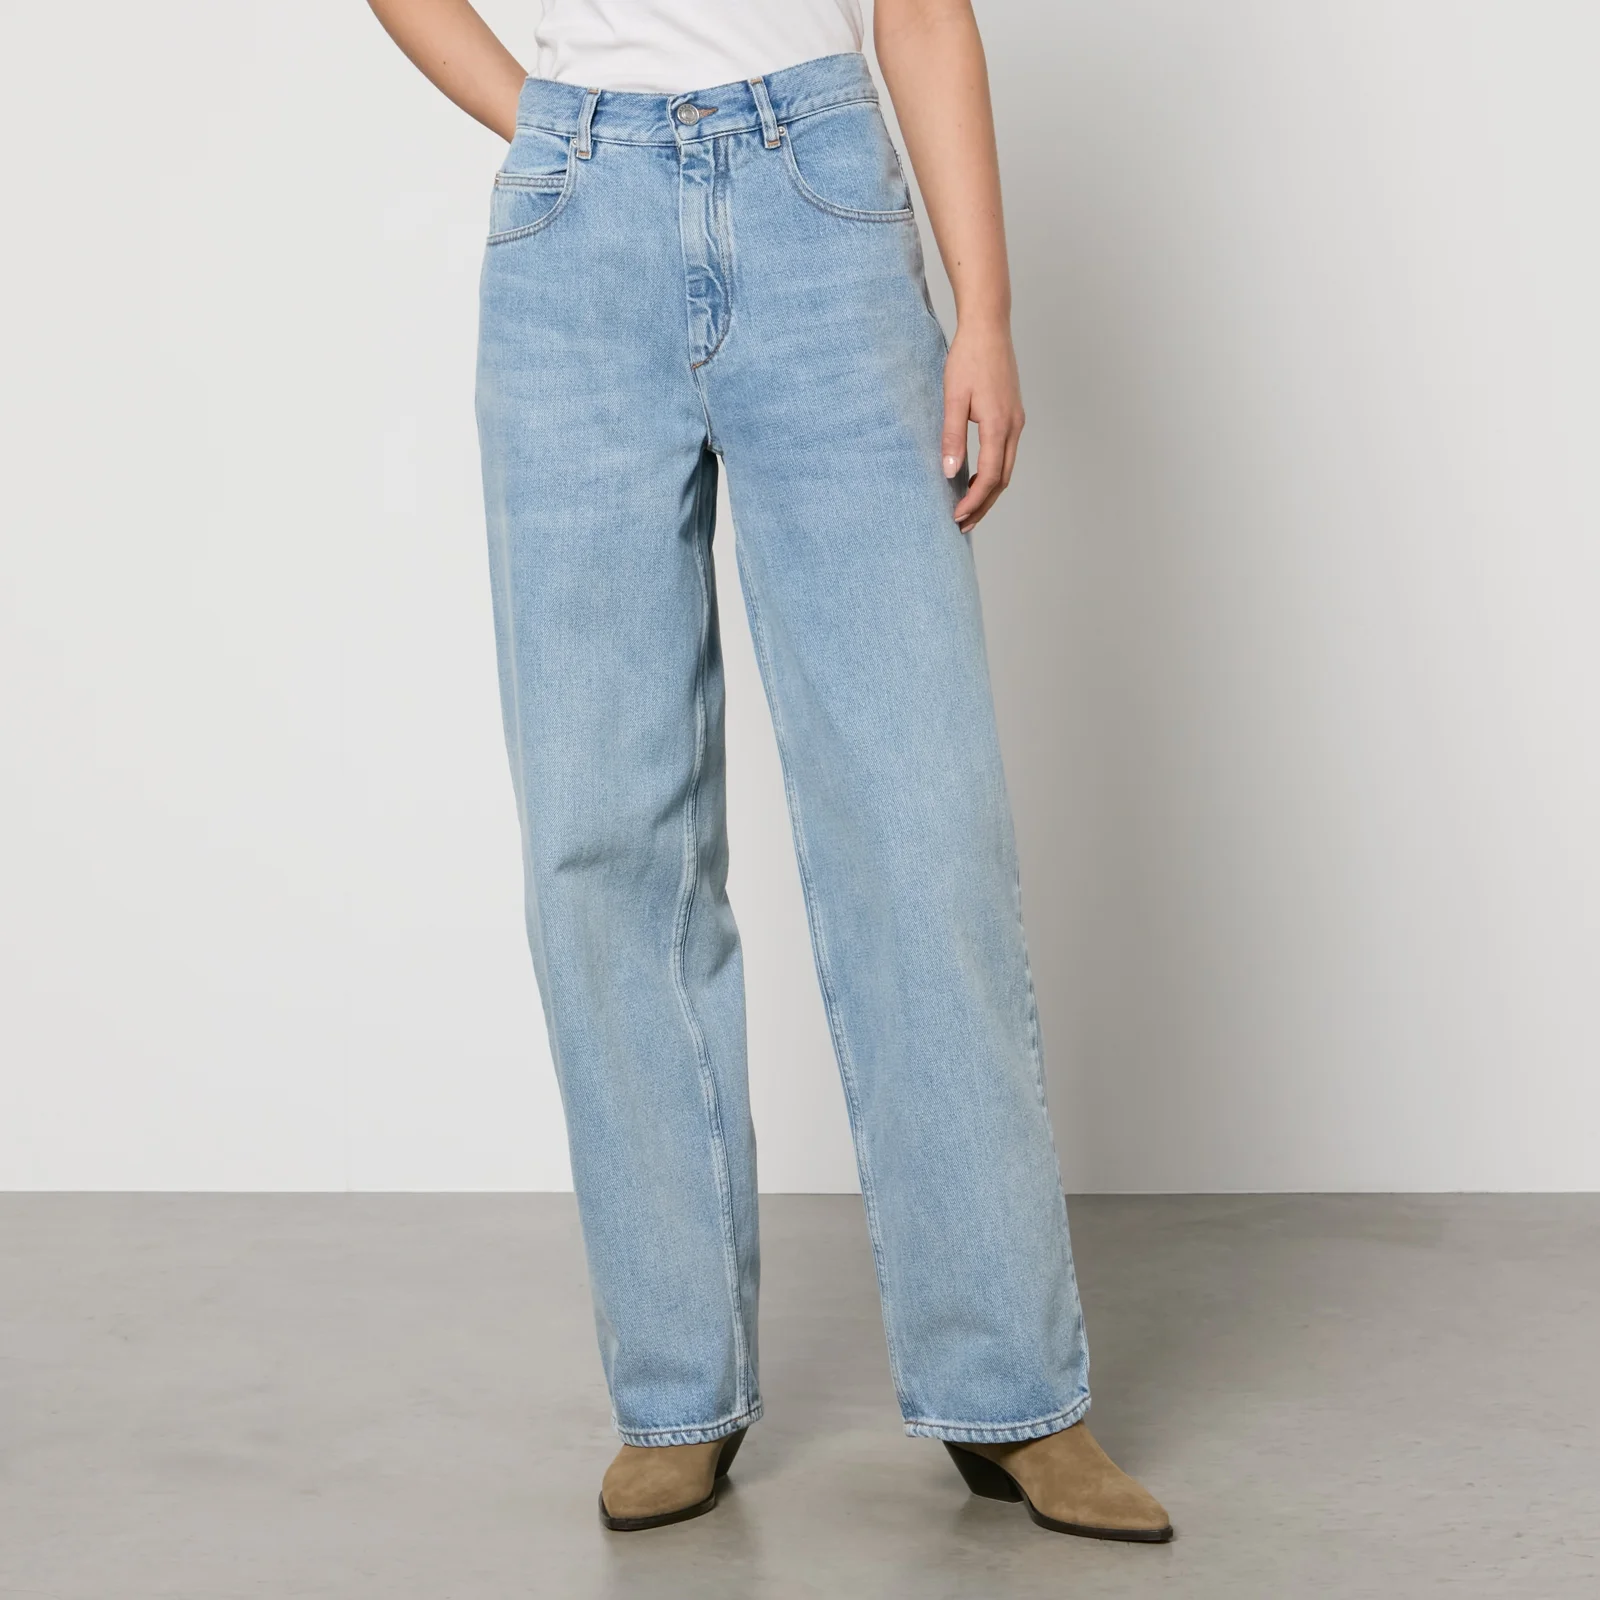 Marant Etoile Joanny Denim Jeans - FR 34/UK 6 Image 1